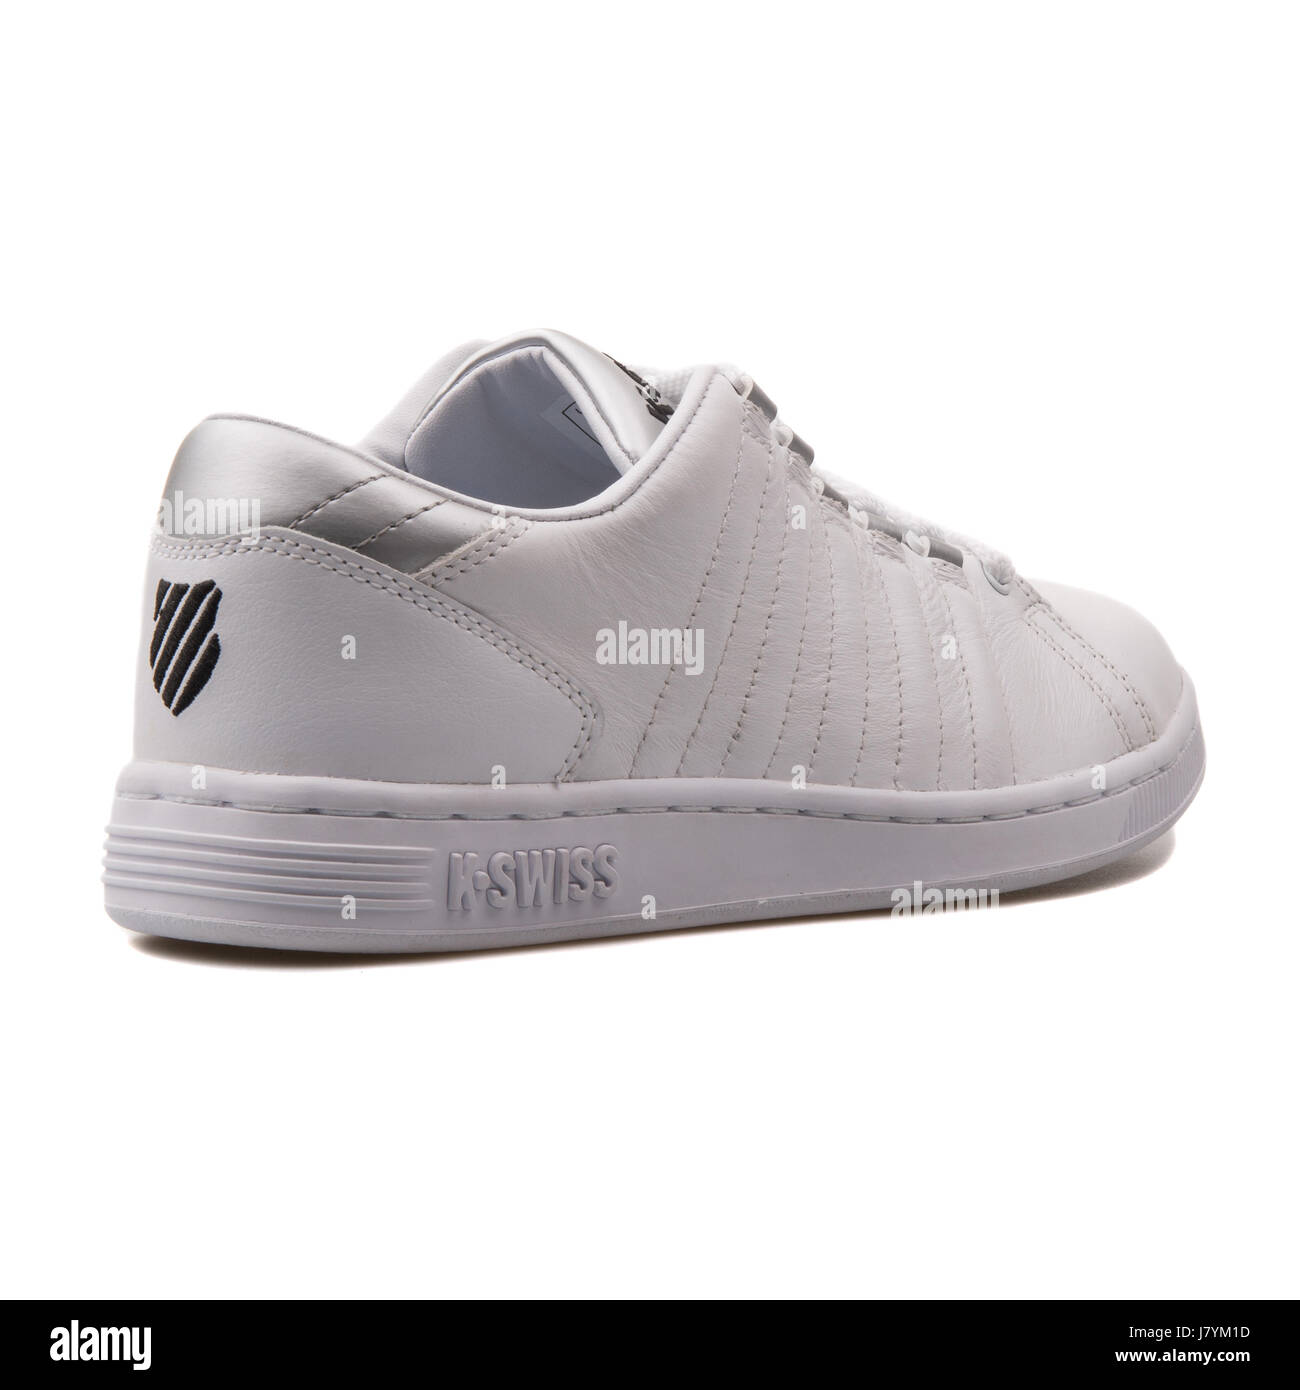 K-Swiss Lozan III weiß und Silber Damen Sport Sneakers - 93212 115 M  Stockfotografie - Alamy